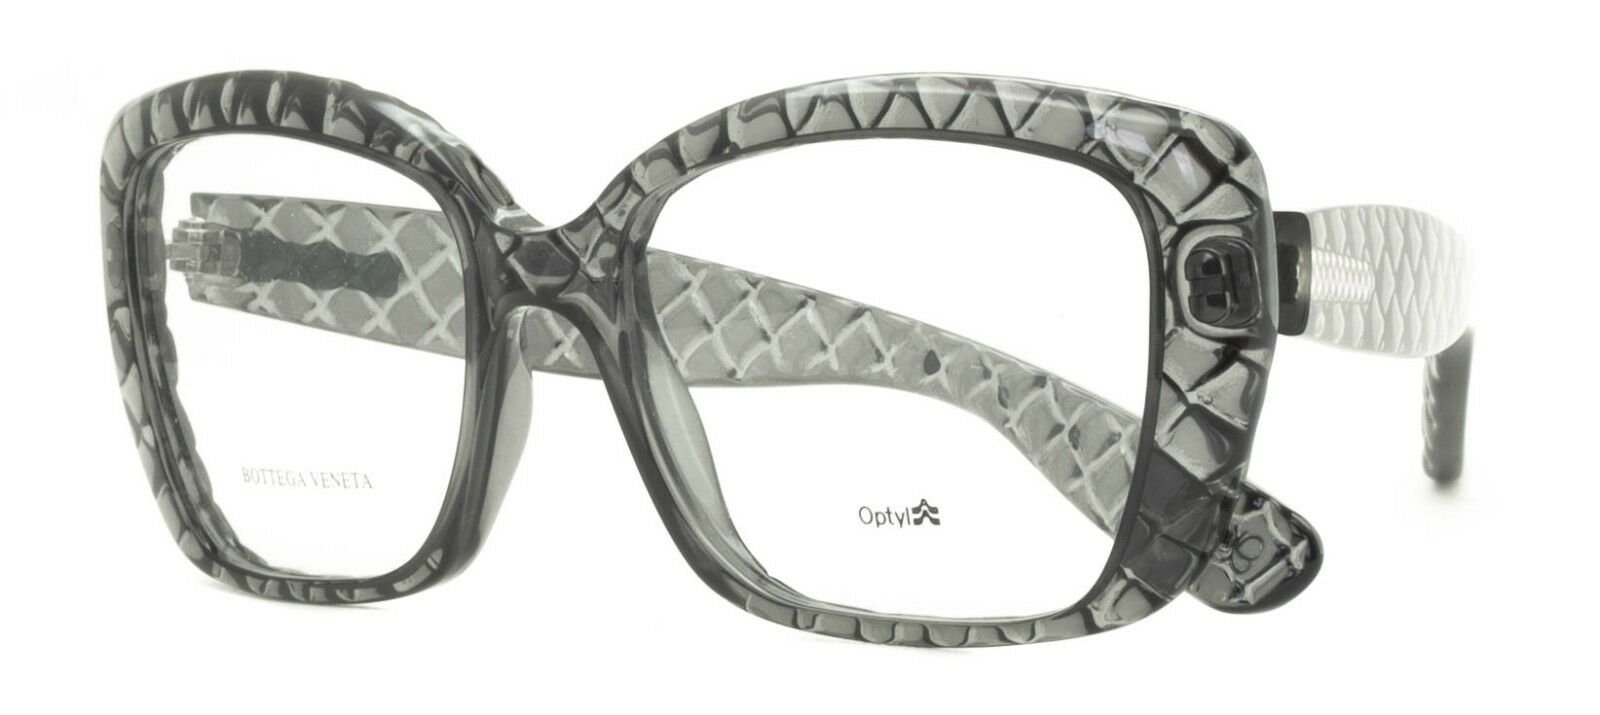 BOTTEGA VENETA B.V. 216 SPN FRAMES NEW Glasses RX Optical Eyewear New - BNIB